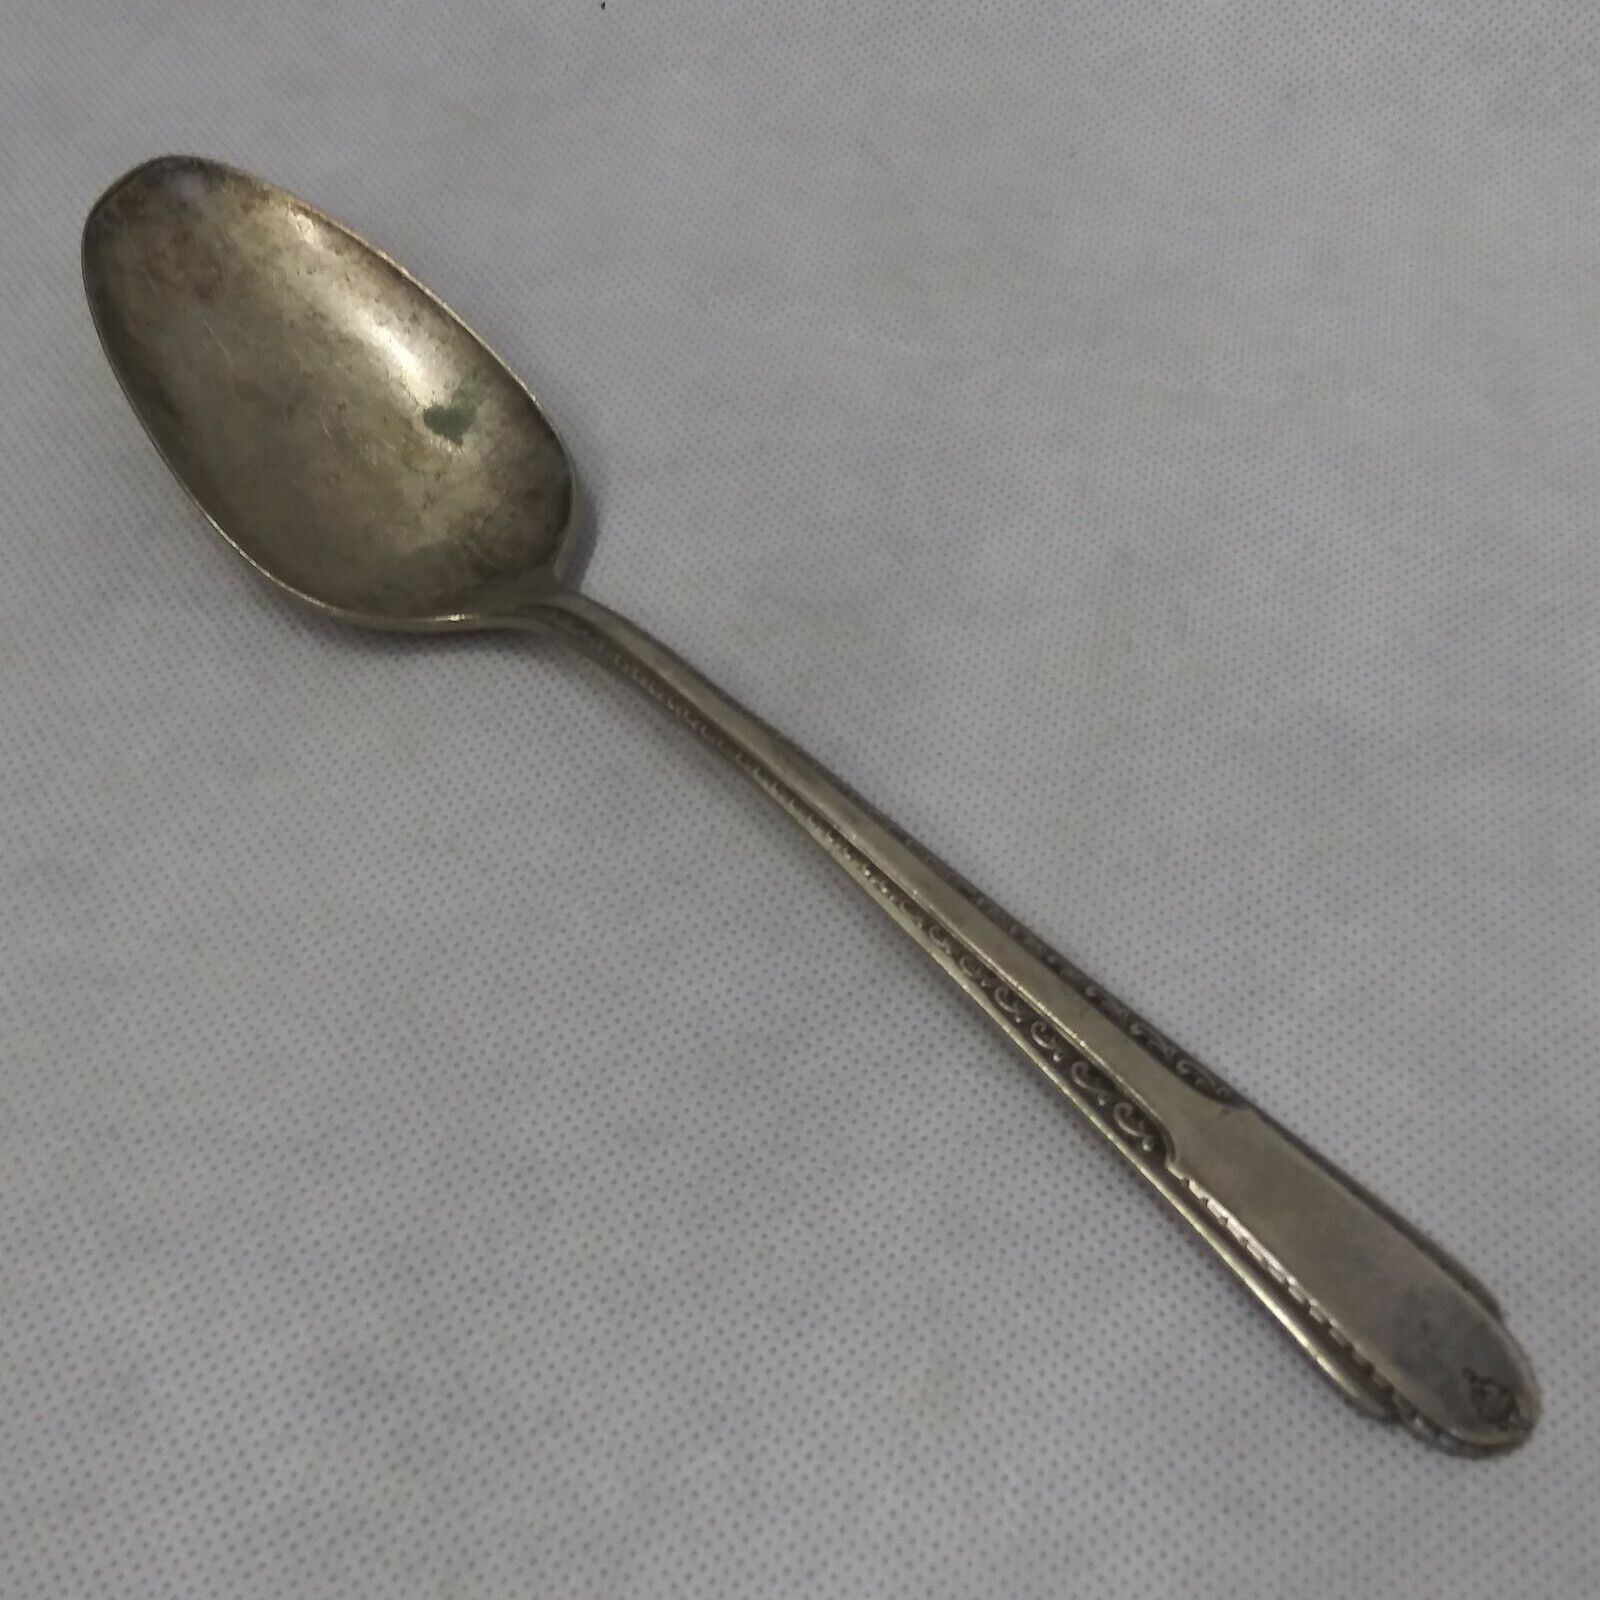 Cavalier Table Serving Spoon CVR1 Silverplate Silver - $9.95